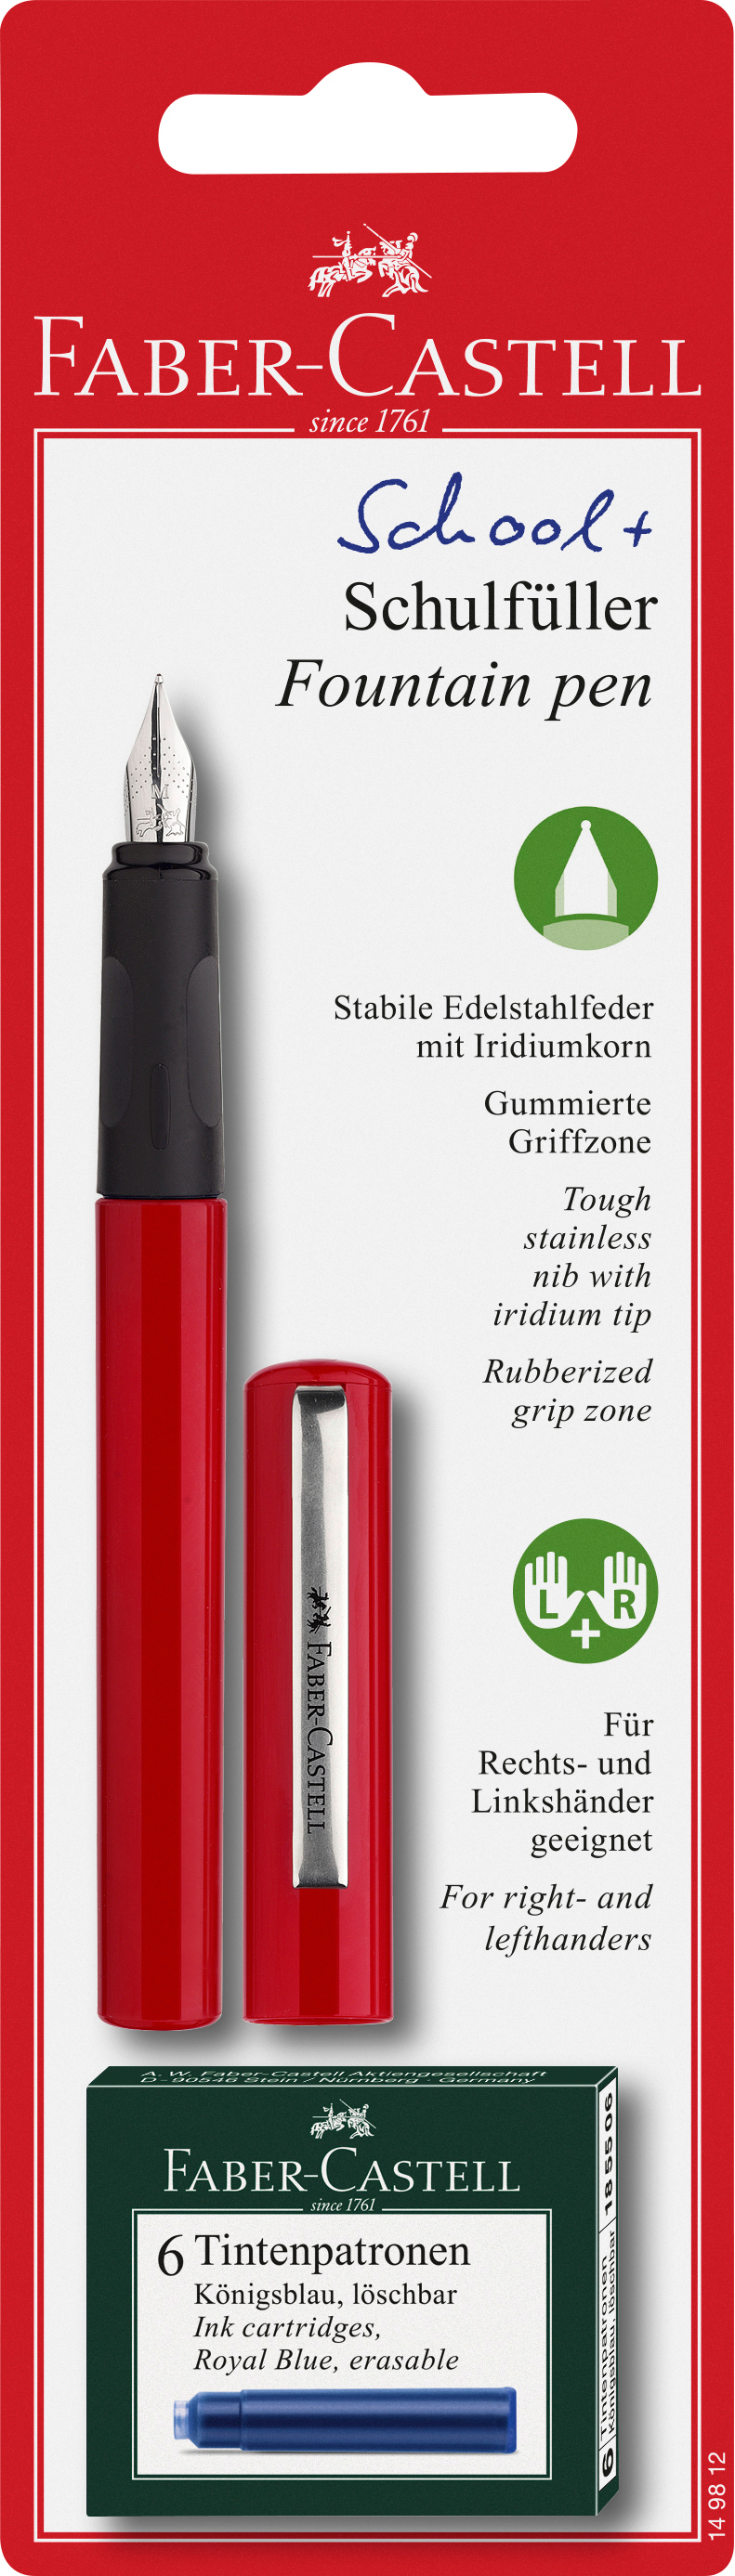 FABER-CASTELL Stylo plume éducatif 149812 rouge